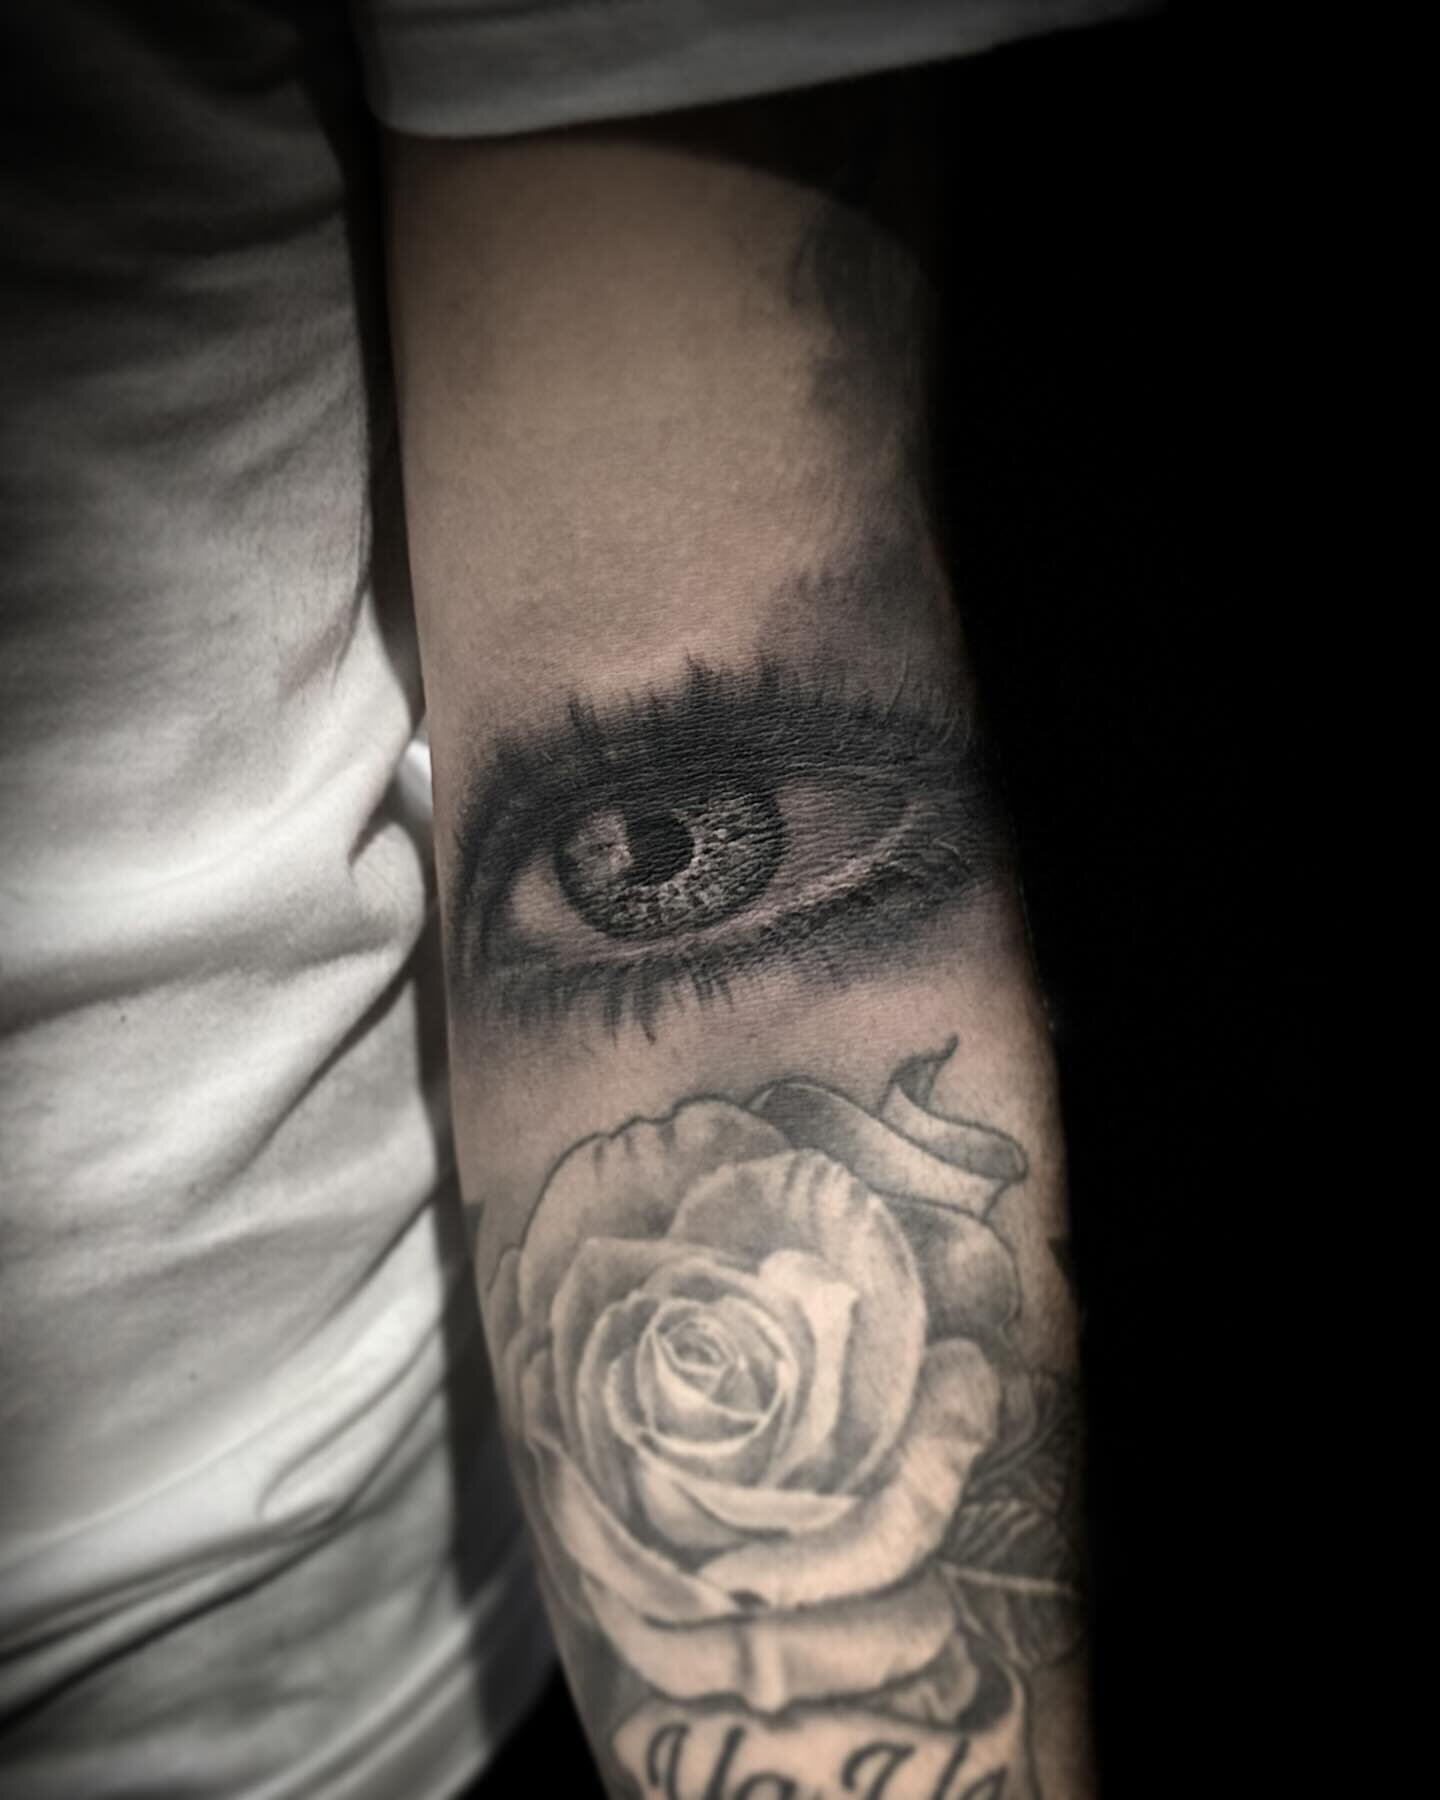 ditch eye 👁️✨
.
.
.
.
.
.
#tattoos #tattoosofinstagram #southjerseytattooartist #njtattooartist @jerseydeviltattooshop